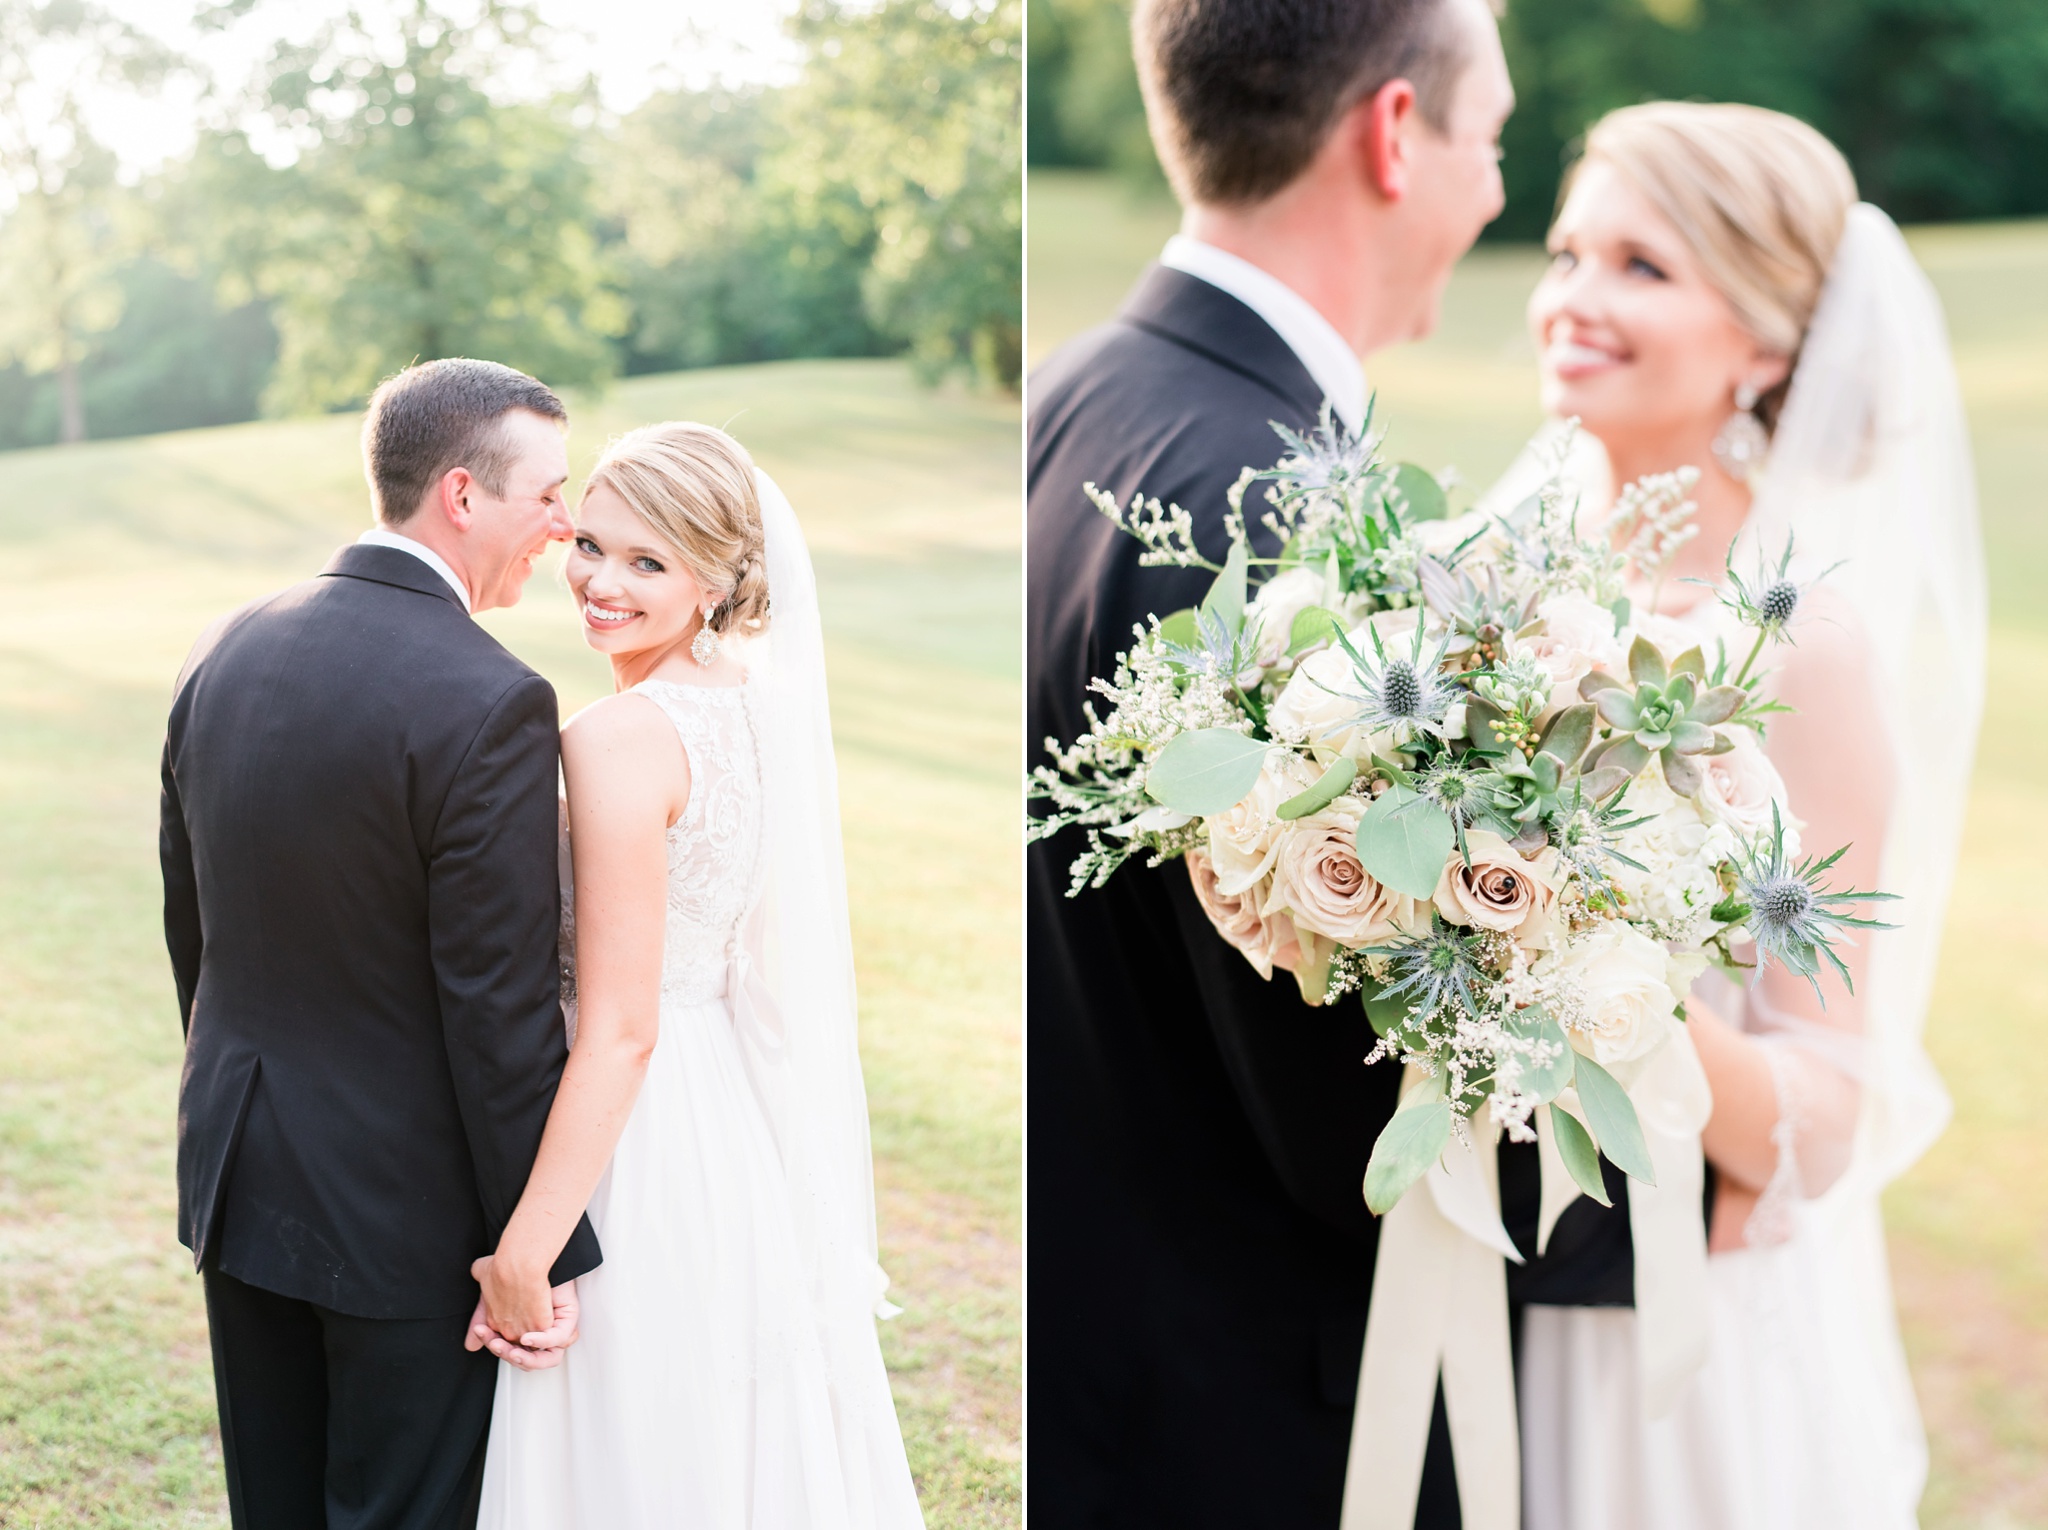 Gray and Black Classic Outdoor Wedding | Birmingham Alabama Wedding Photographers_0040.jpg